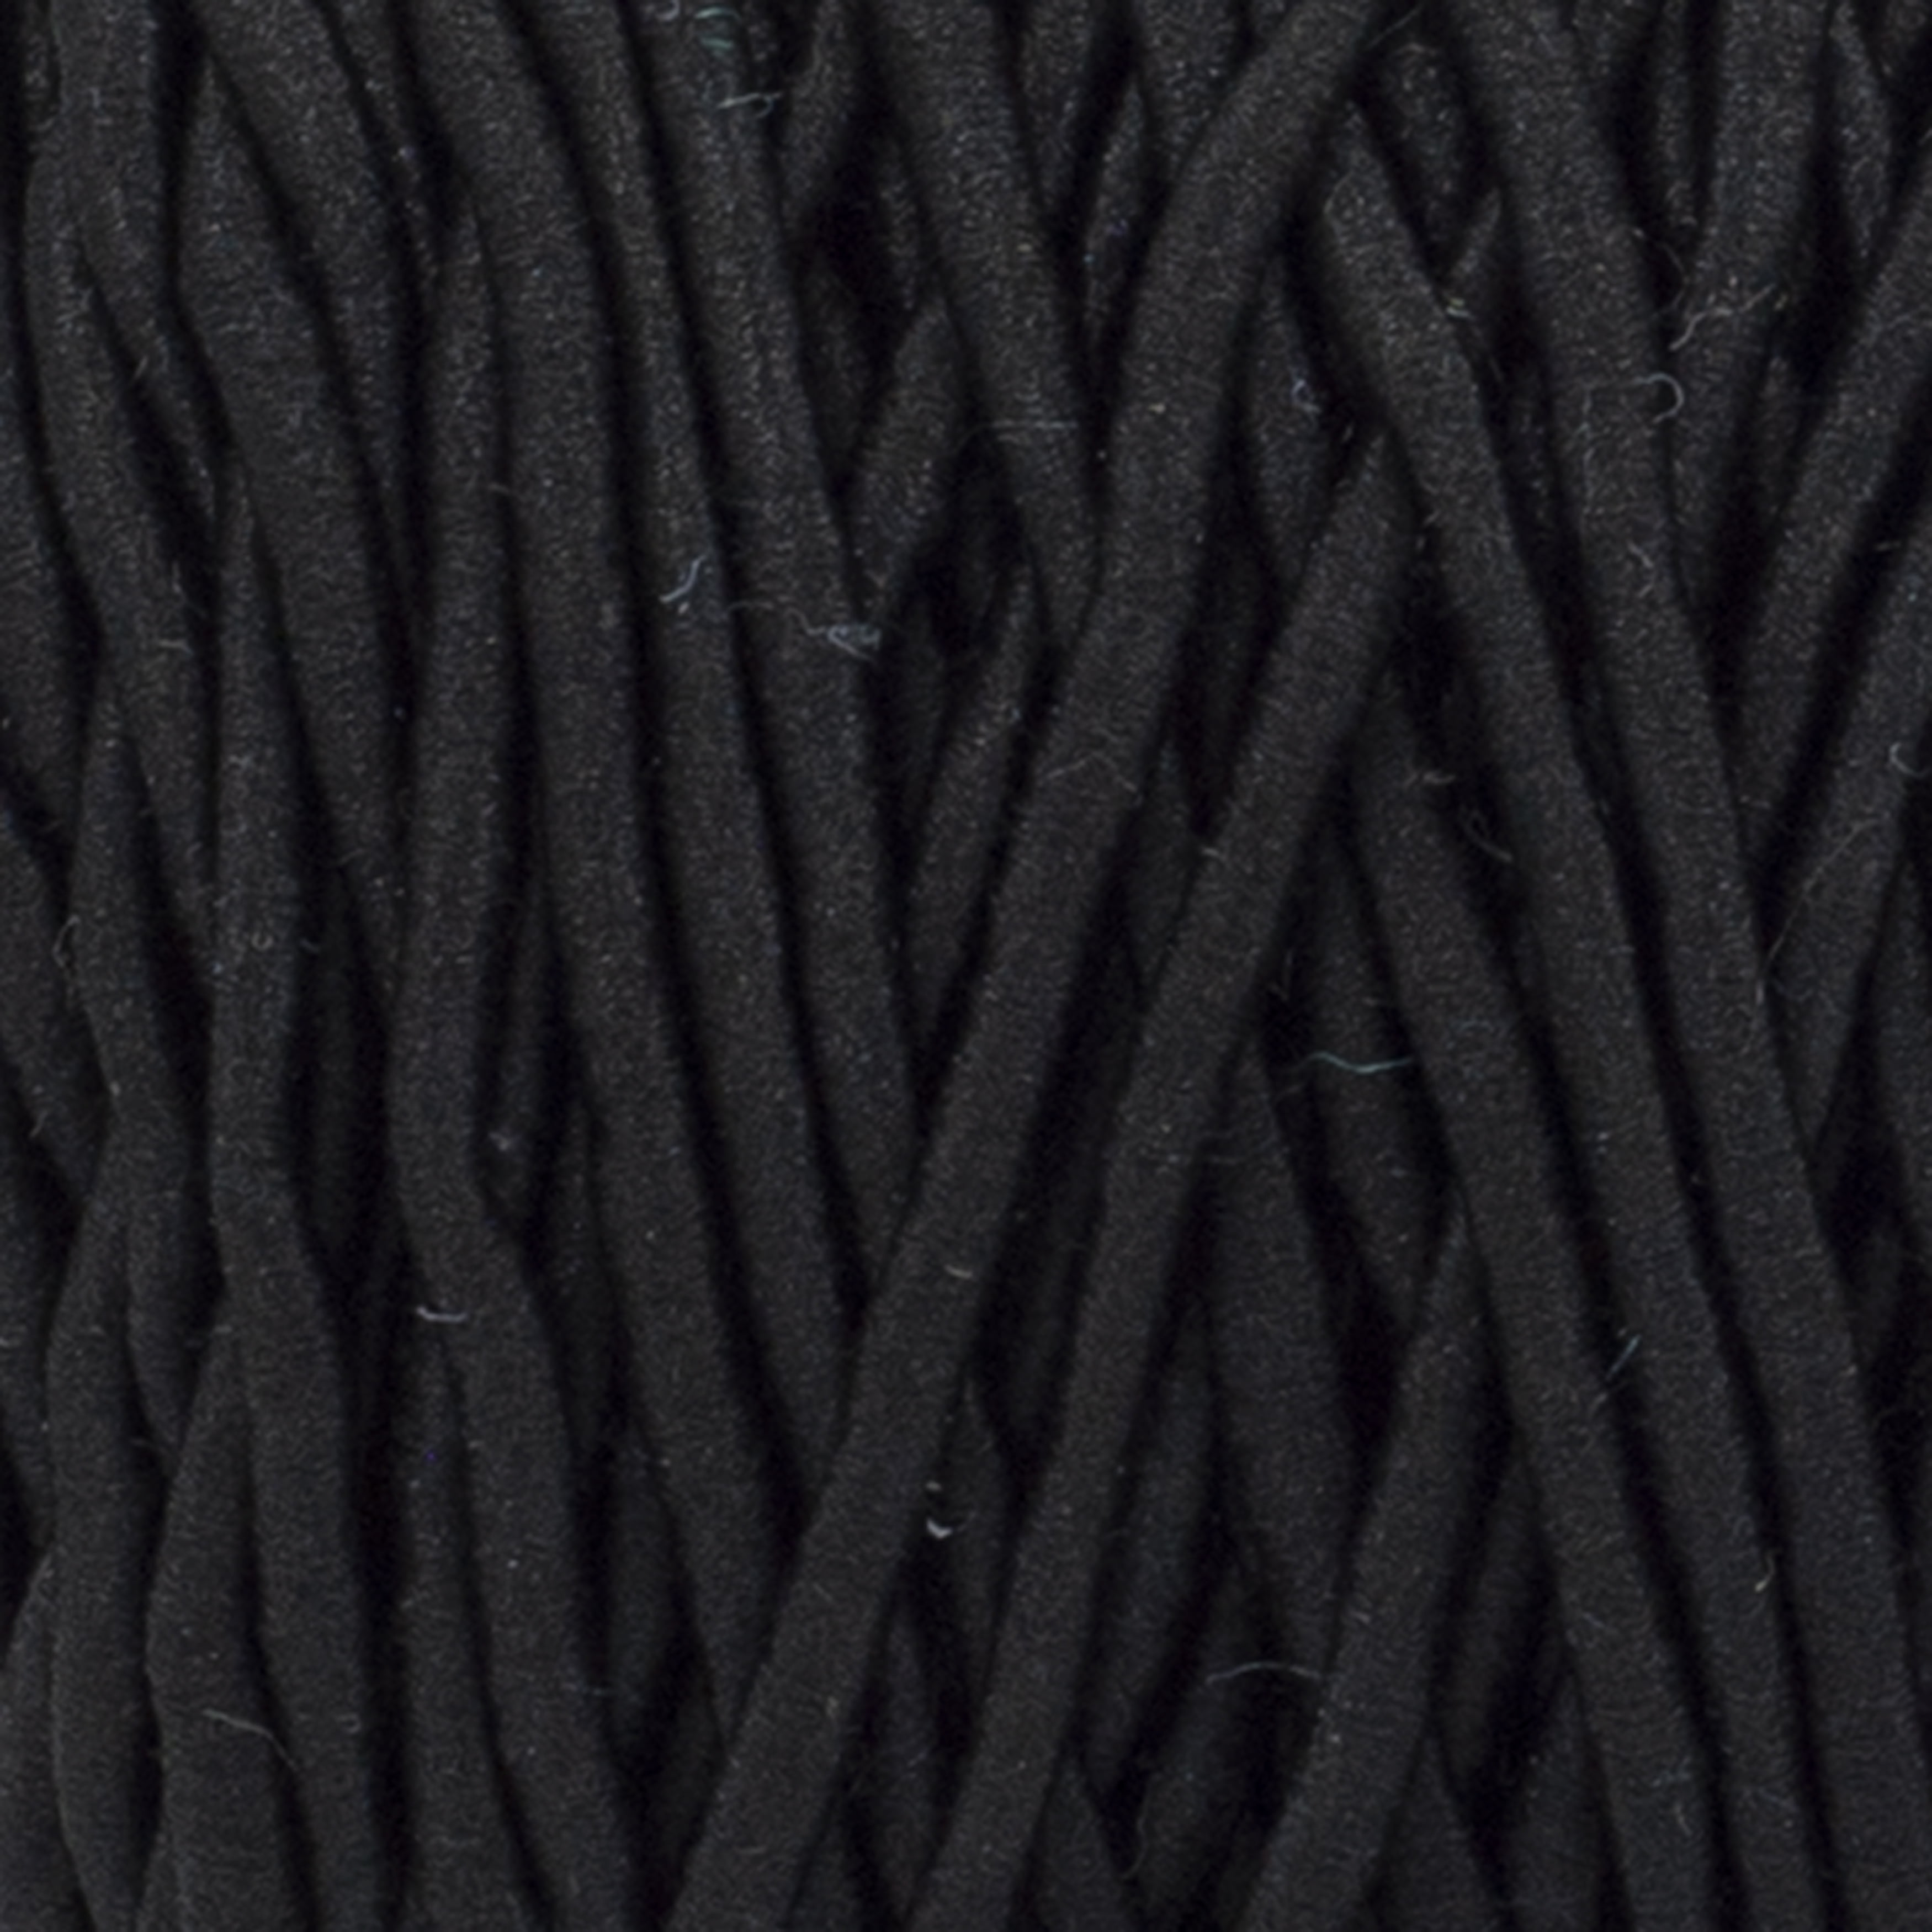 Lion Brand Yarn for The Home Cording Yarn, Grey